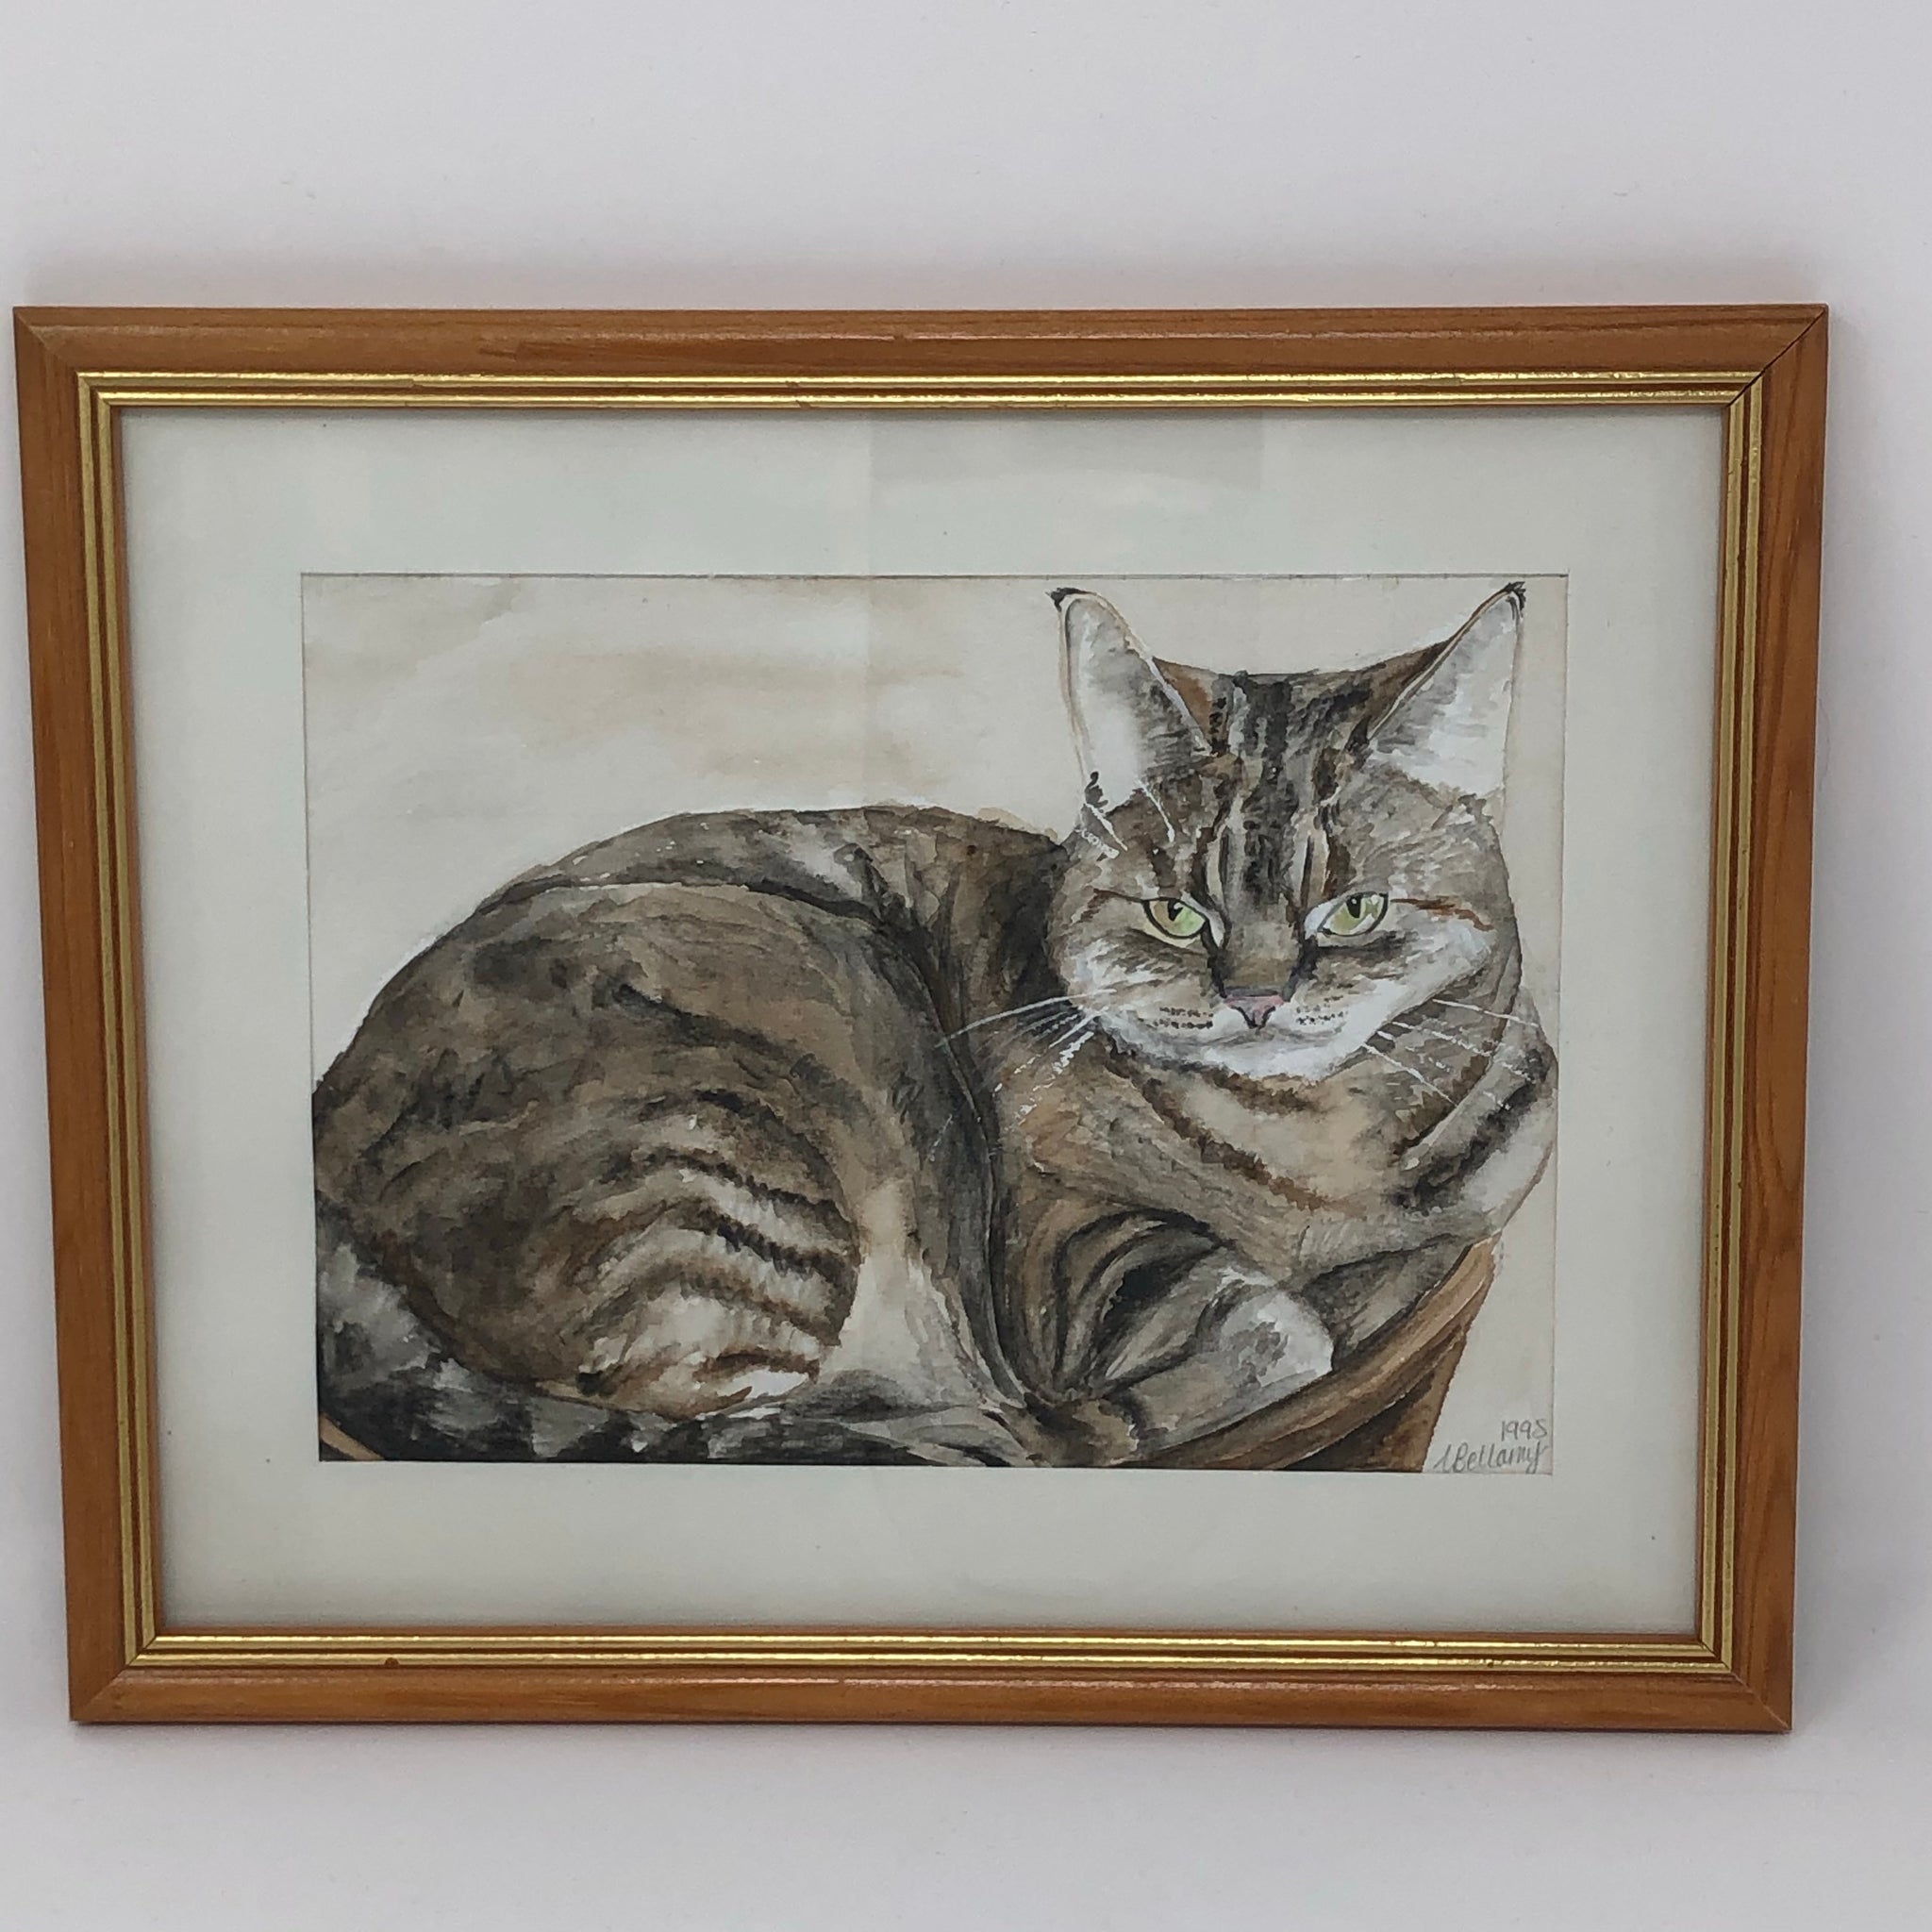 Vintage Tabby Cat ORIGINAL Watercolour